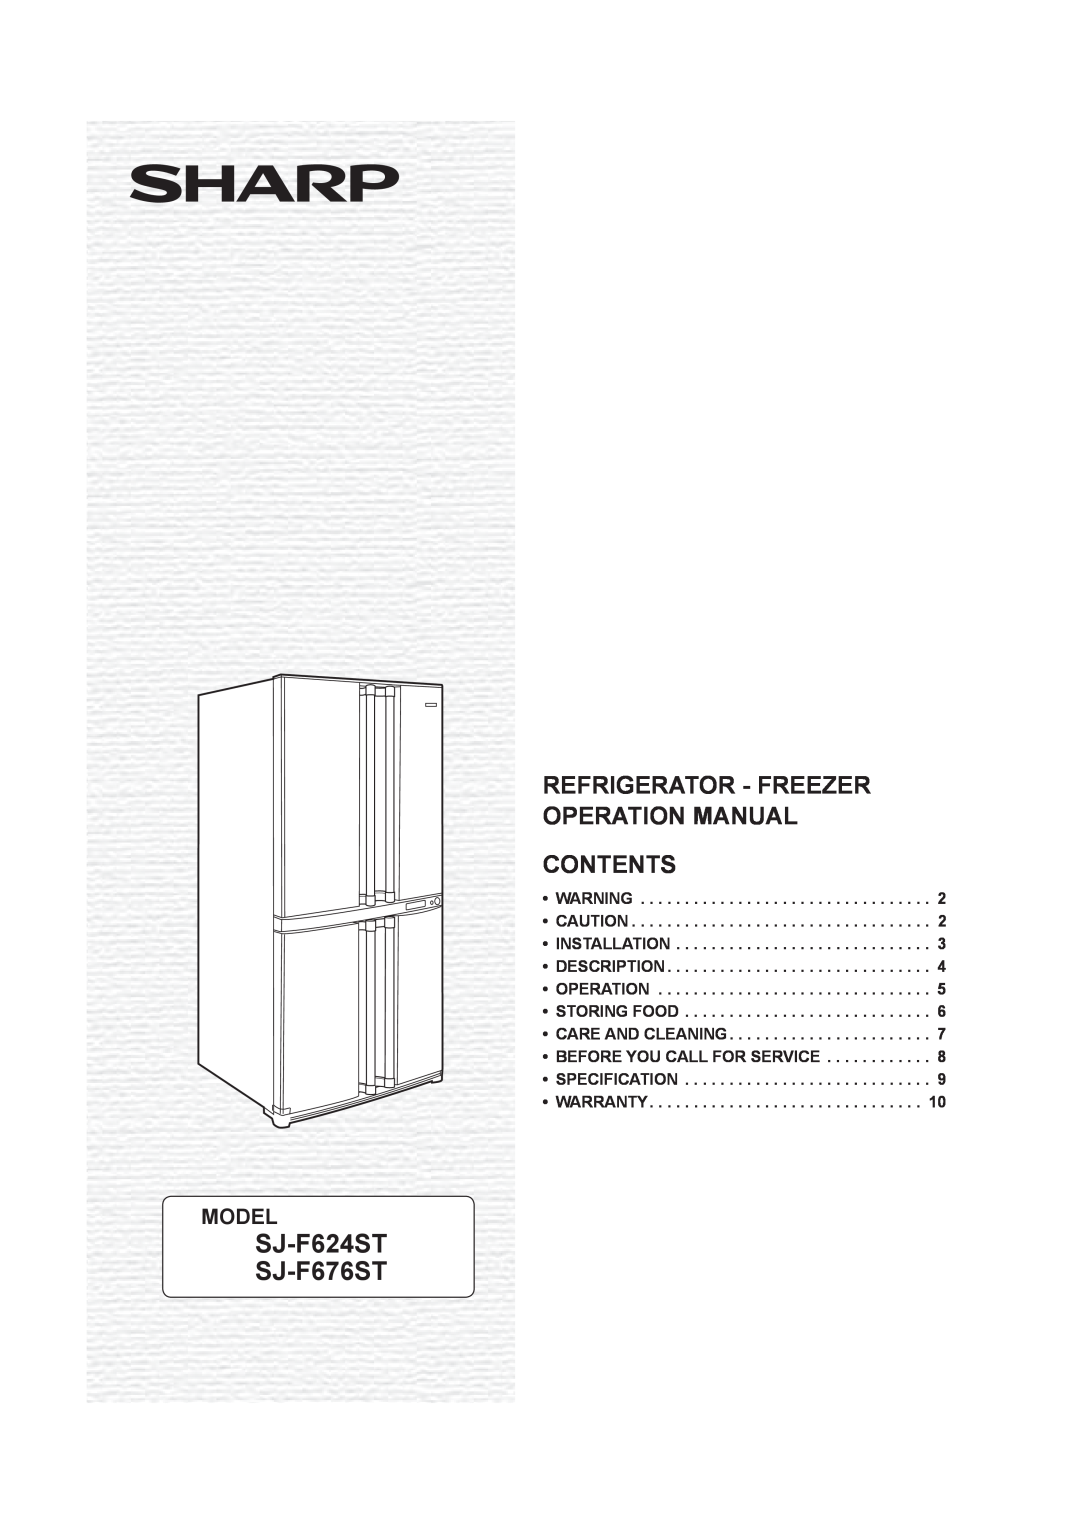 Sharp operation manual SJ-F624ST SJ-F676ST, Refrigerator - Freezer Operation Manual Contents, Model 